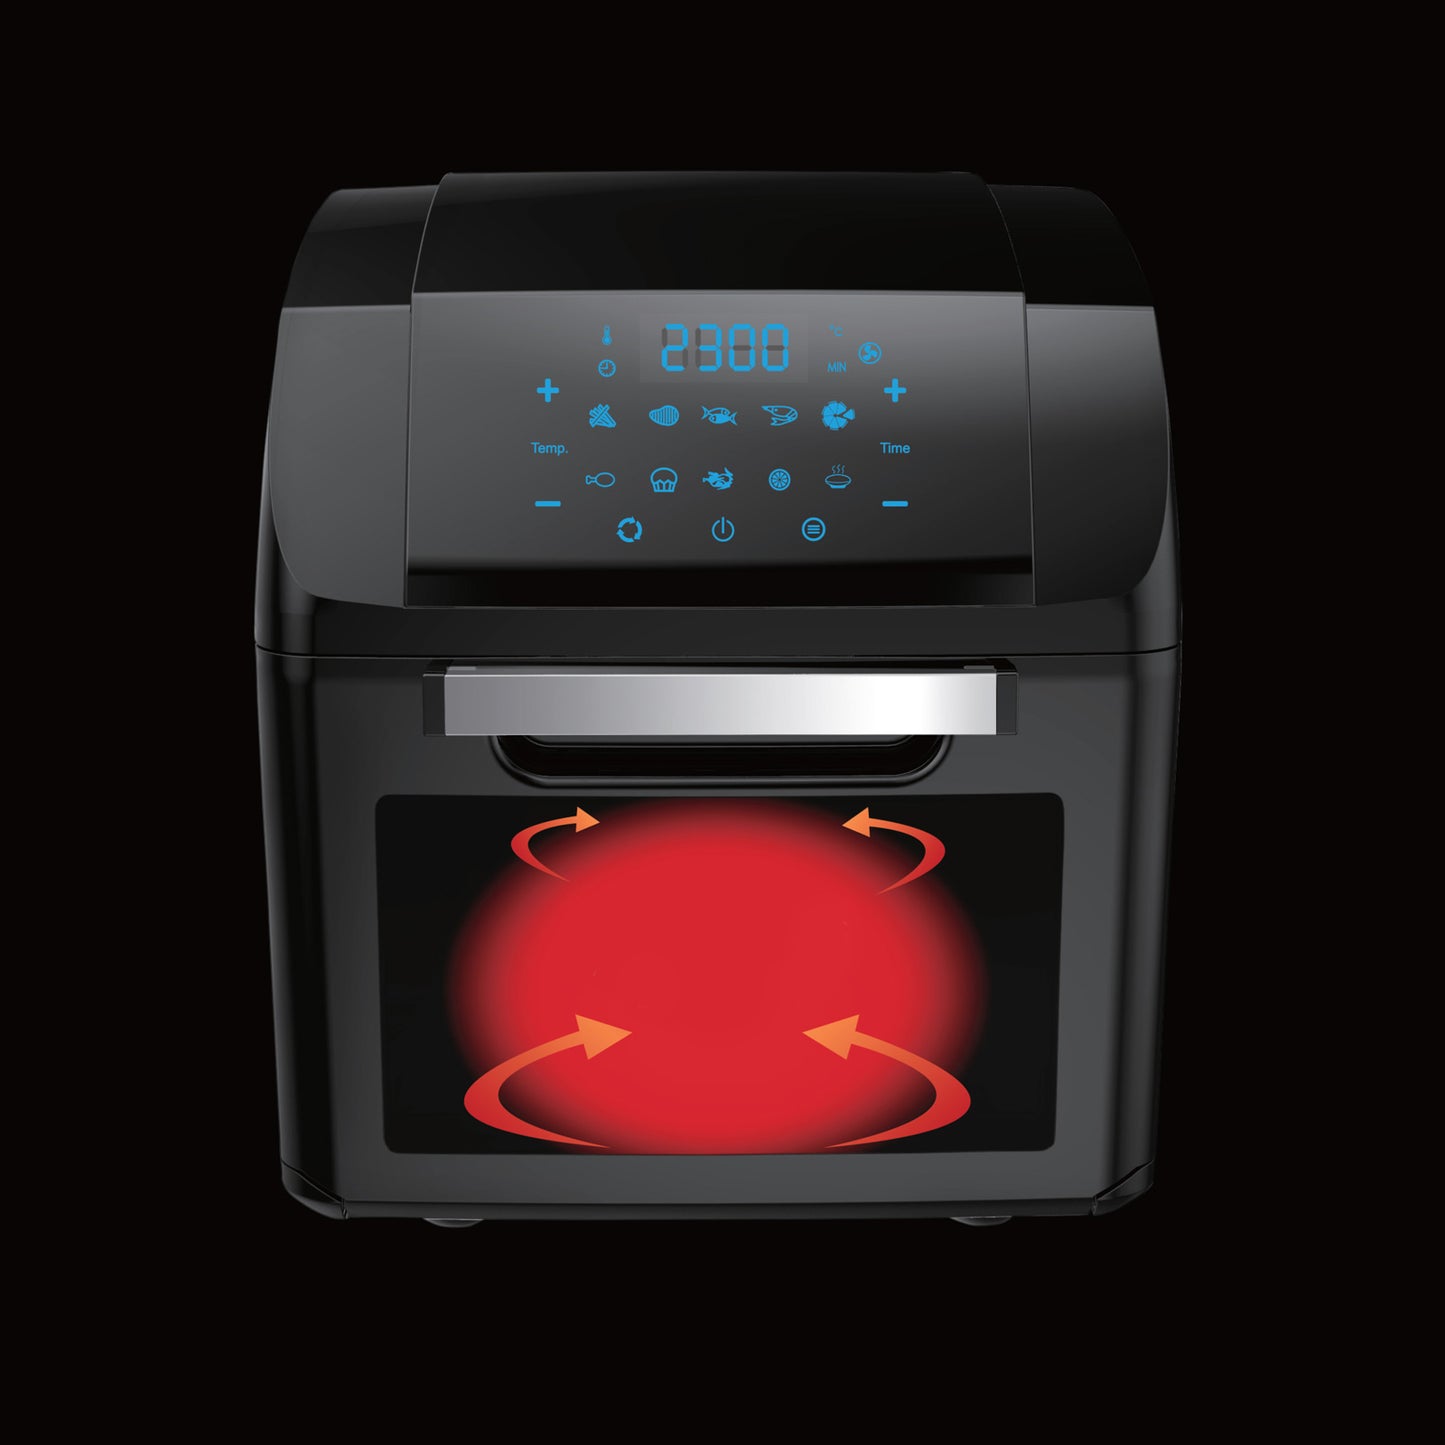 Kitchen Couture Air Fryer 14 Litre Multifunctional Digital Display Black